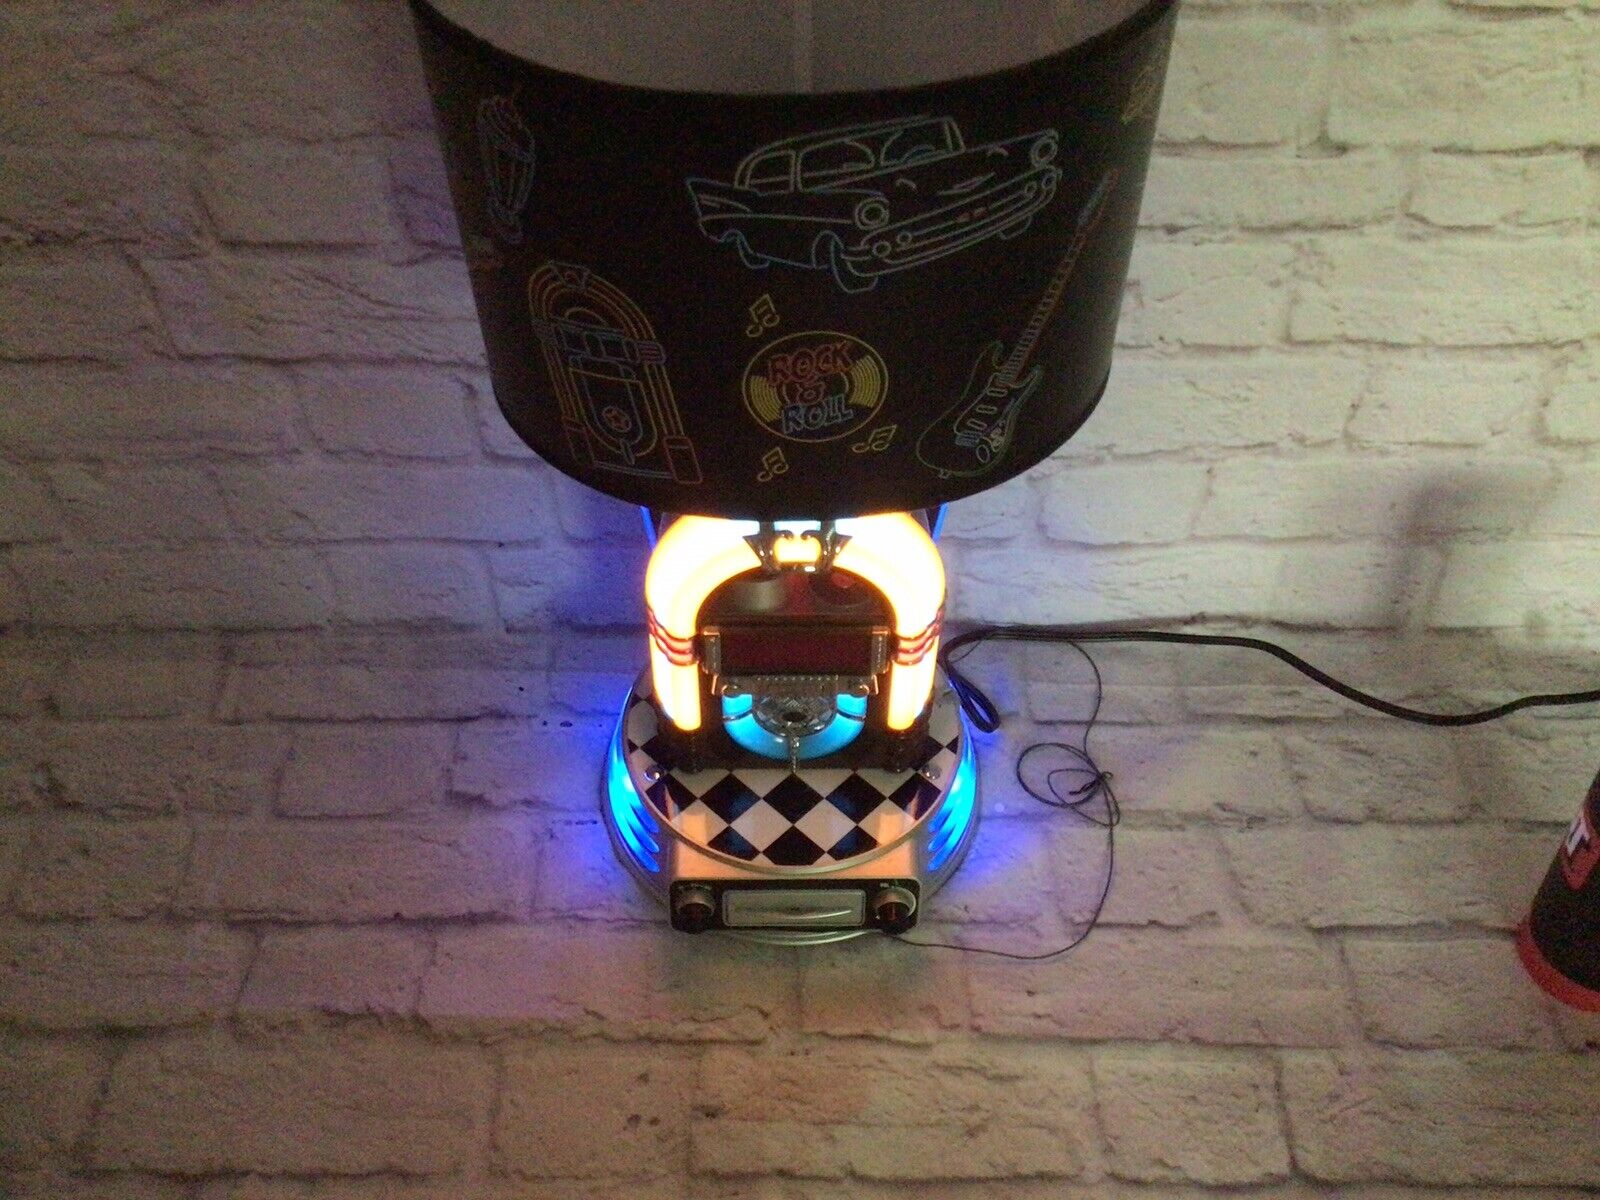 Juke Box Themed-Lamp,FM Radio,Alarm Clock, iPod dock—(“ Awesome Condition”)